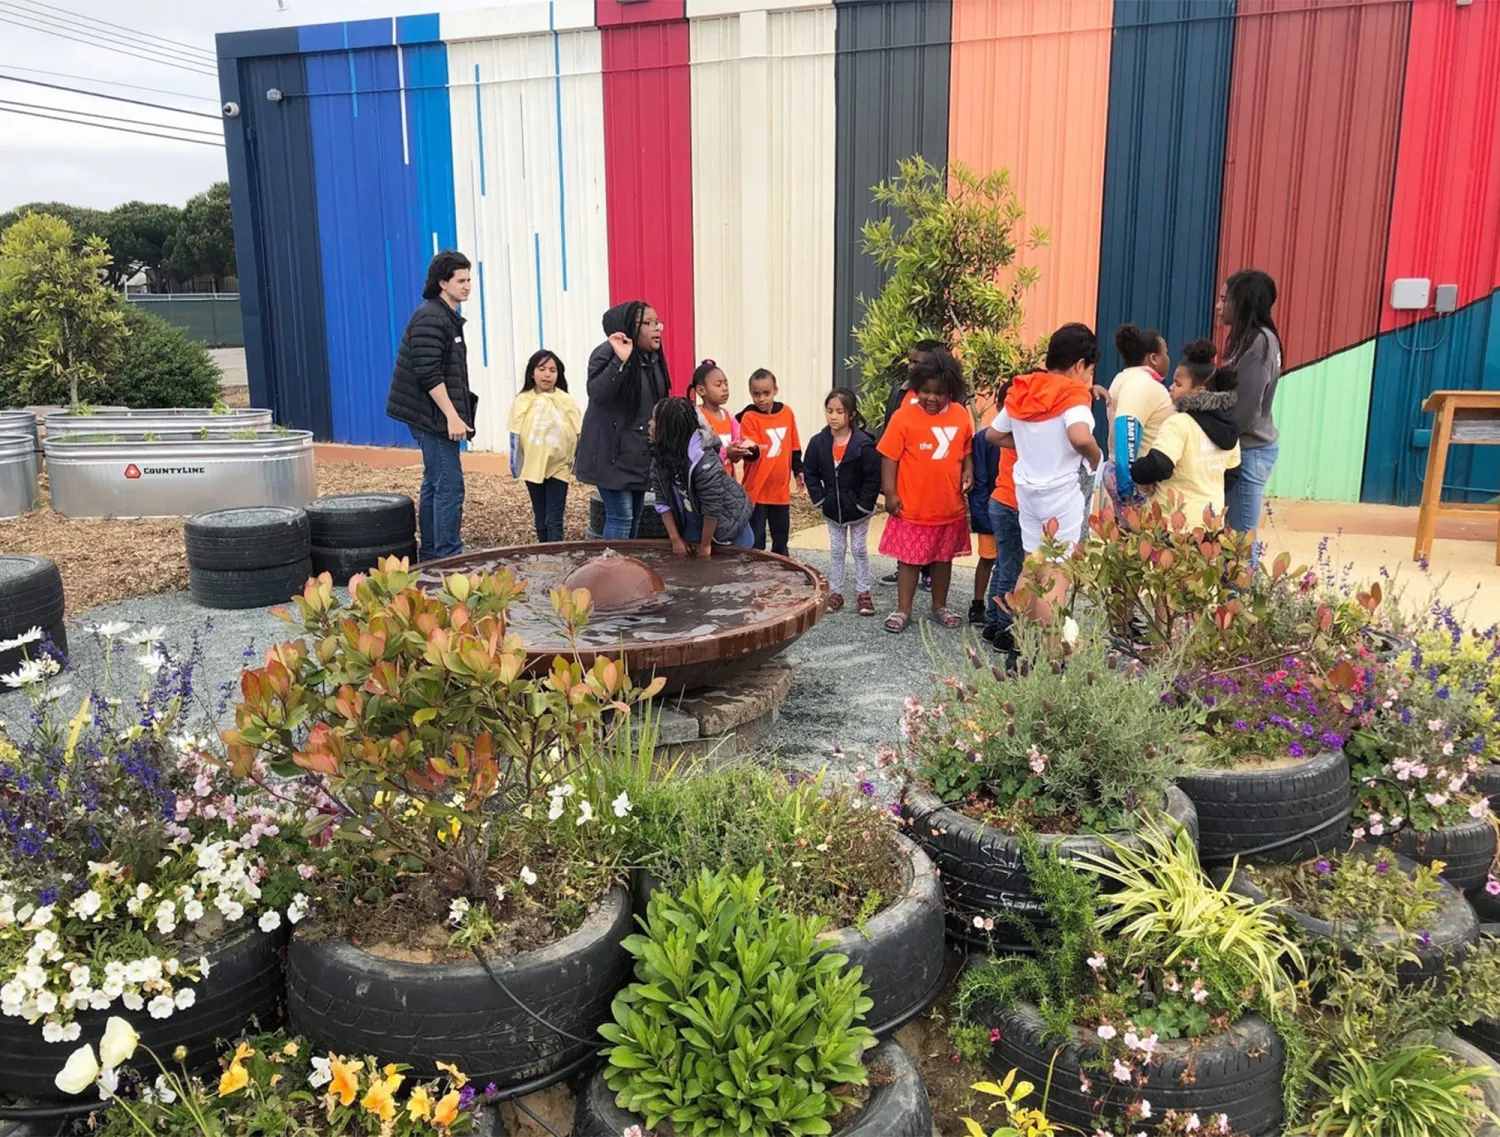 School kids in Gather Garden in San Francisco.